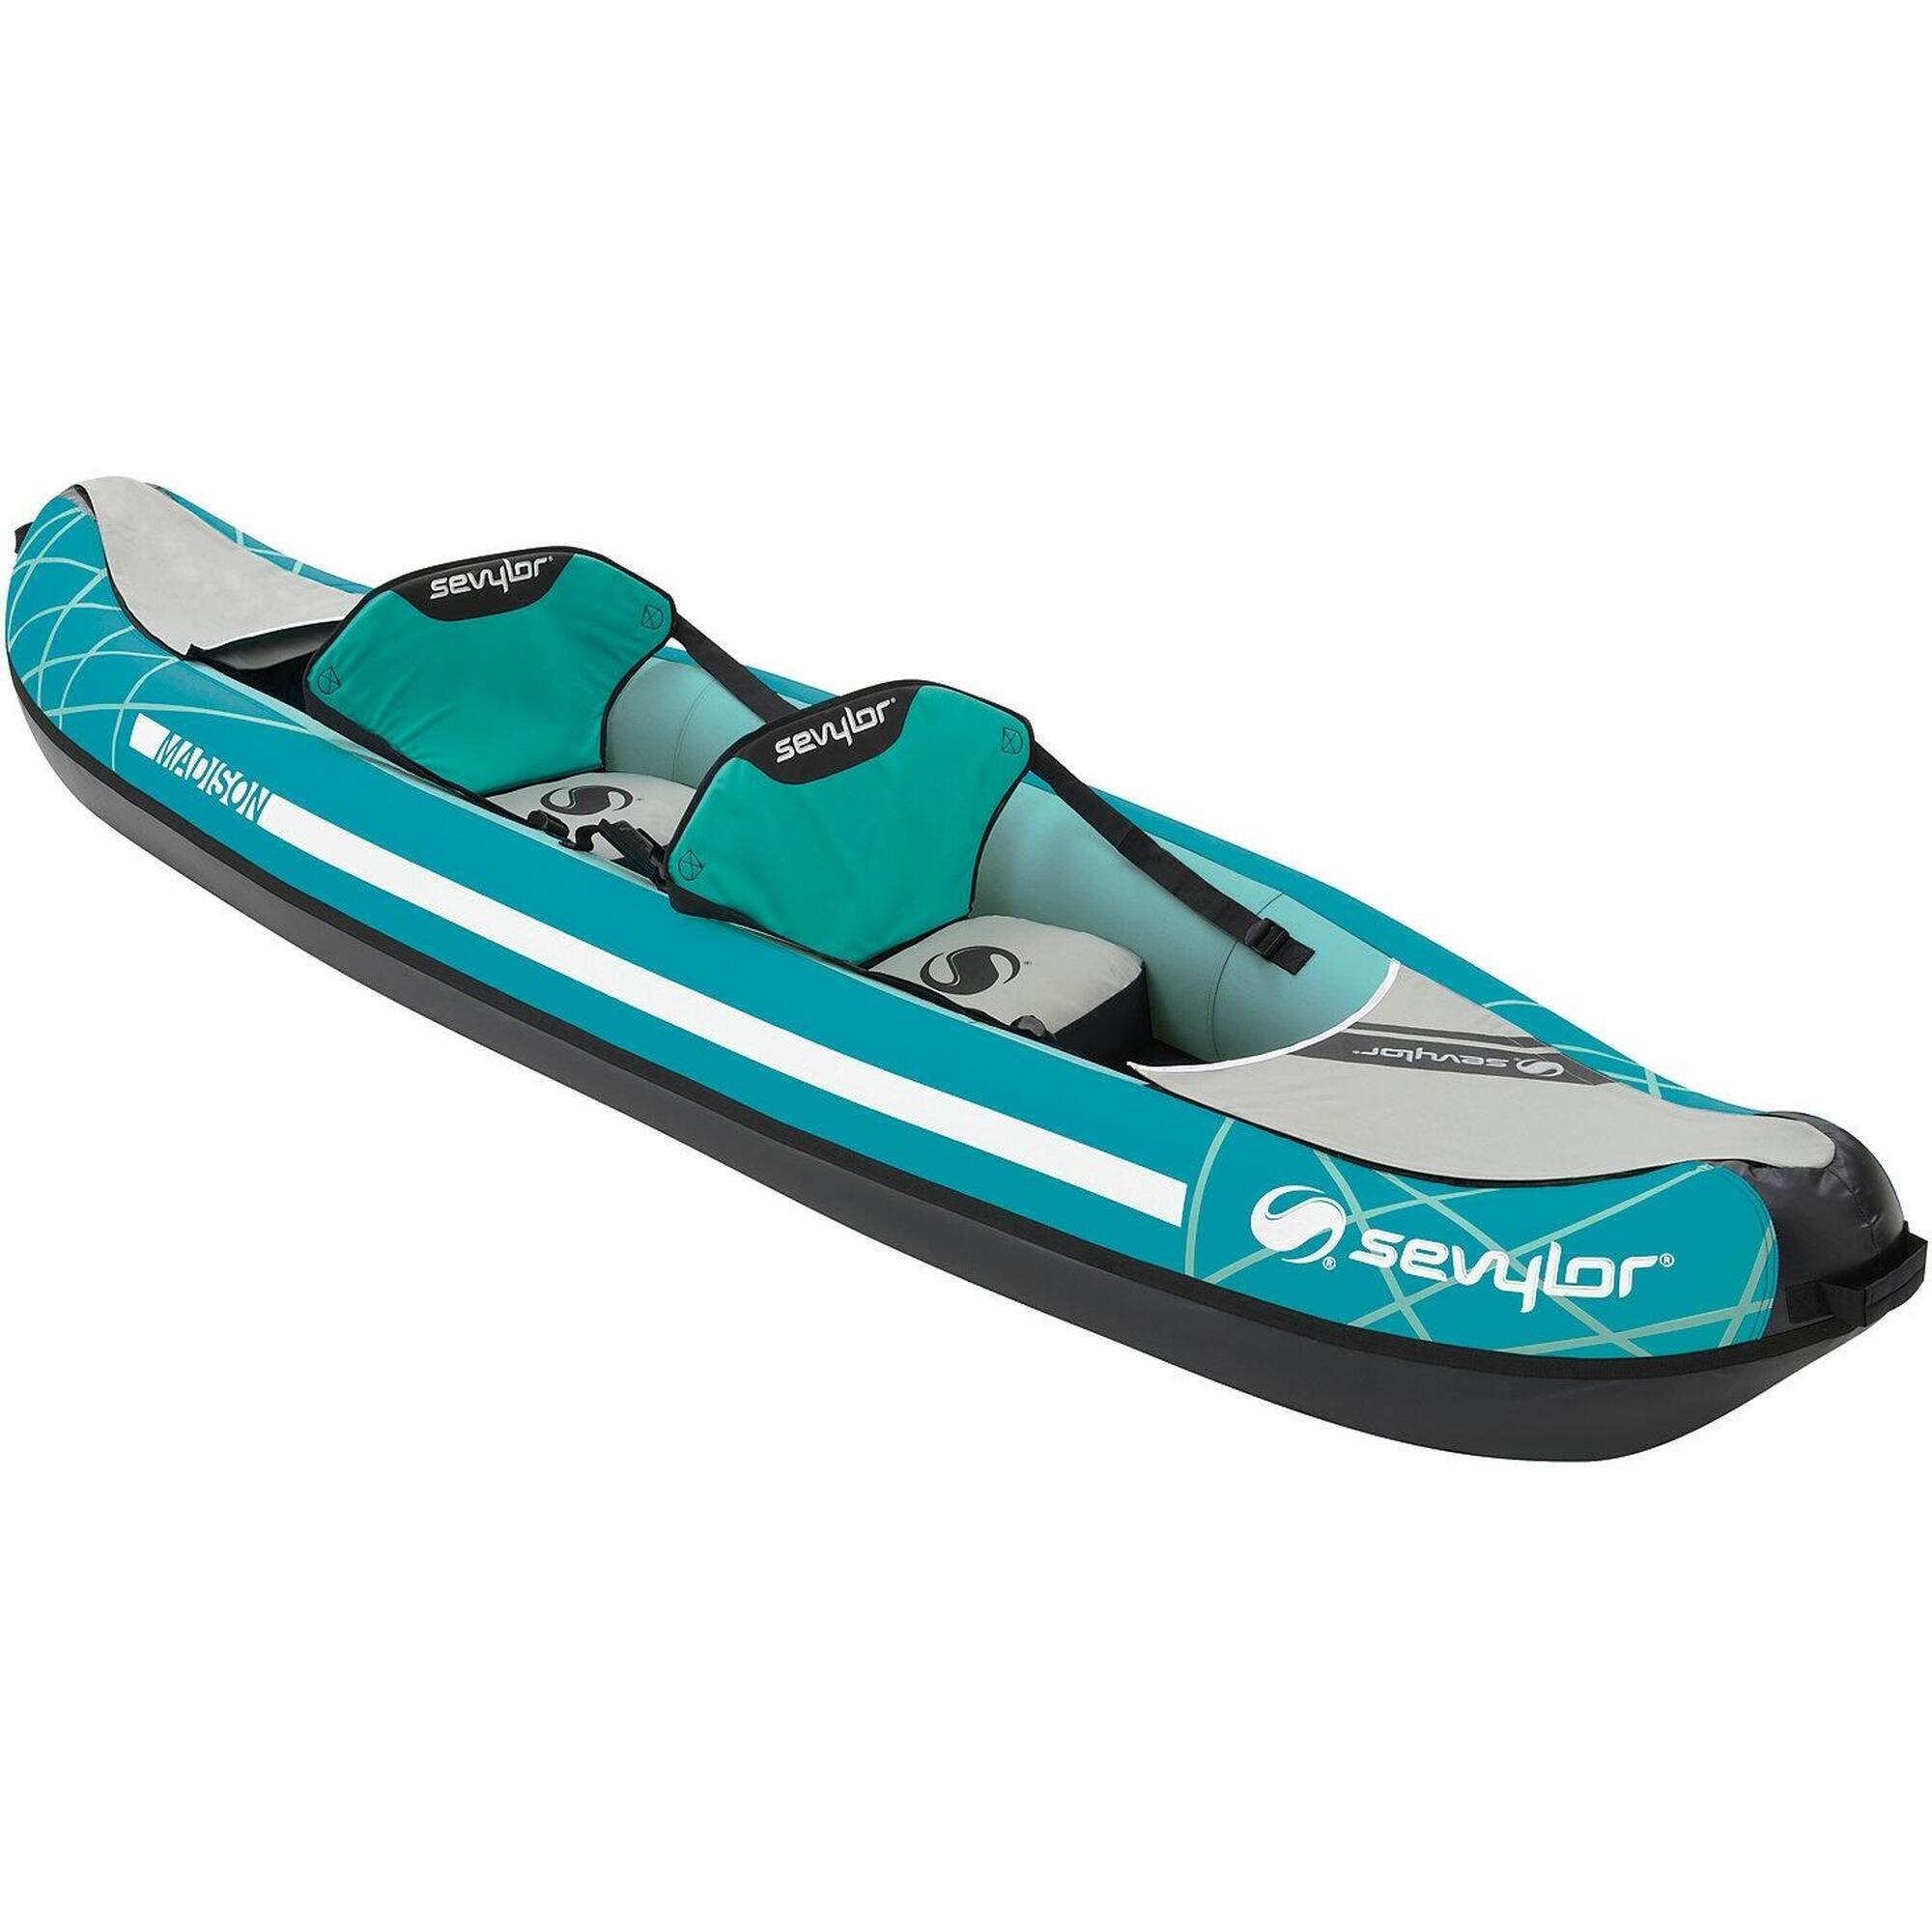 SEVYLOR Madison 2 Person Inflatable Kayak - Blue